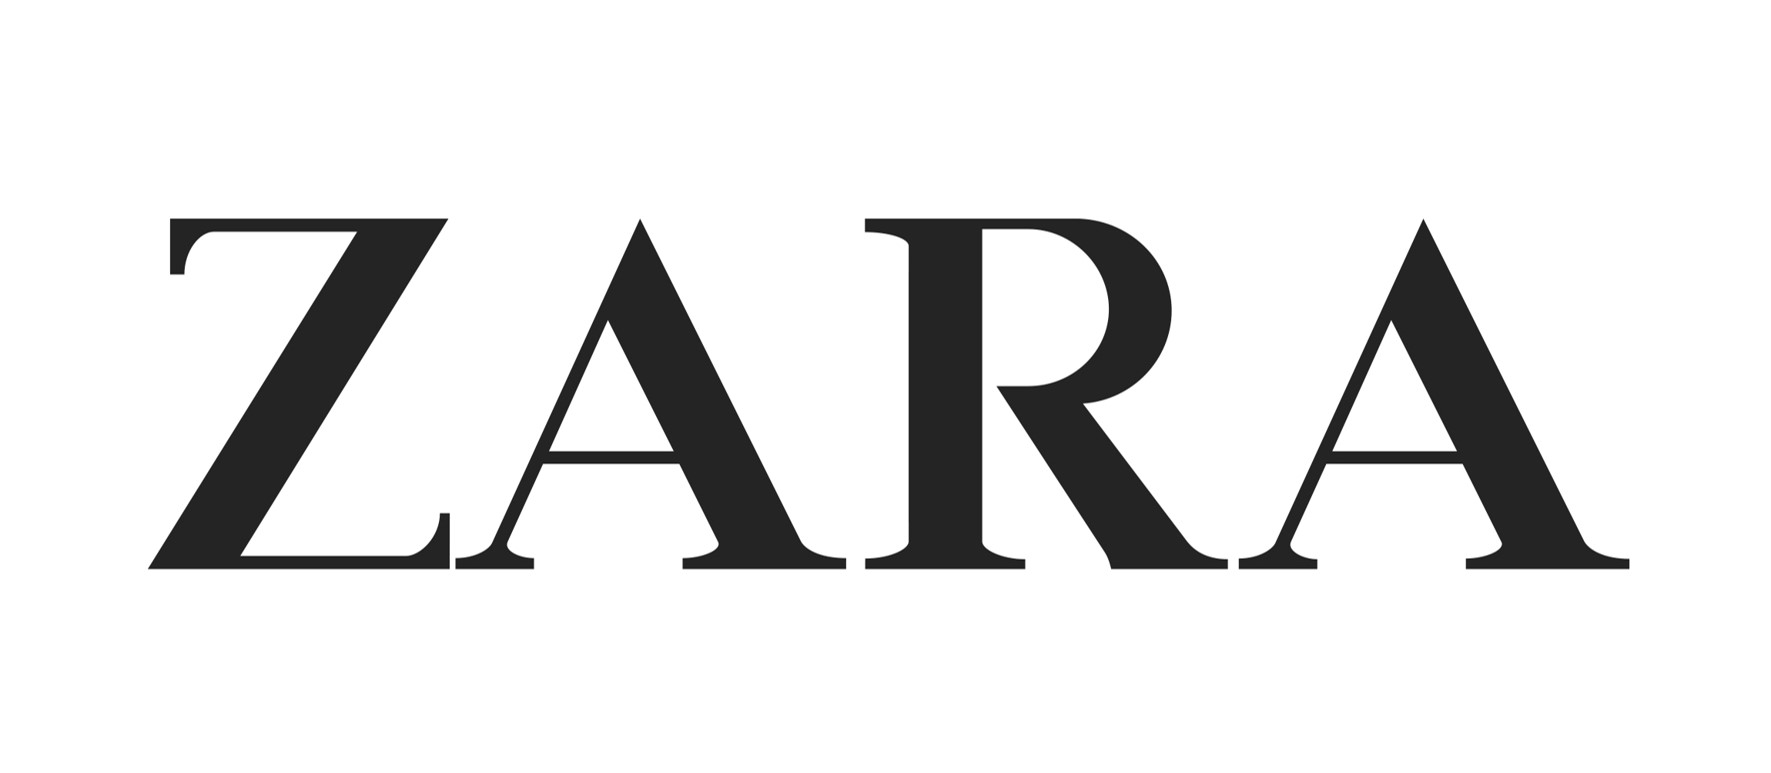 Logo de la marque Zara - SAINT LAURENT DU VAR